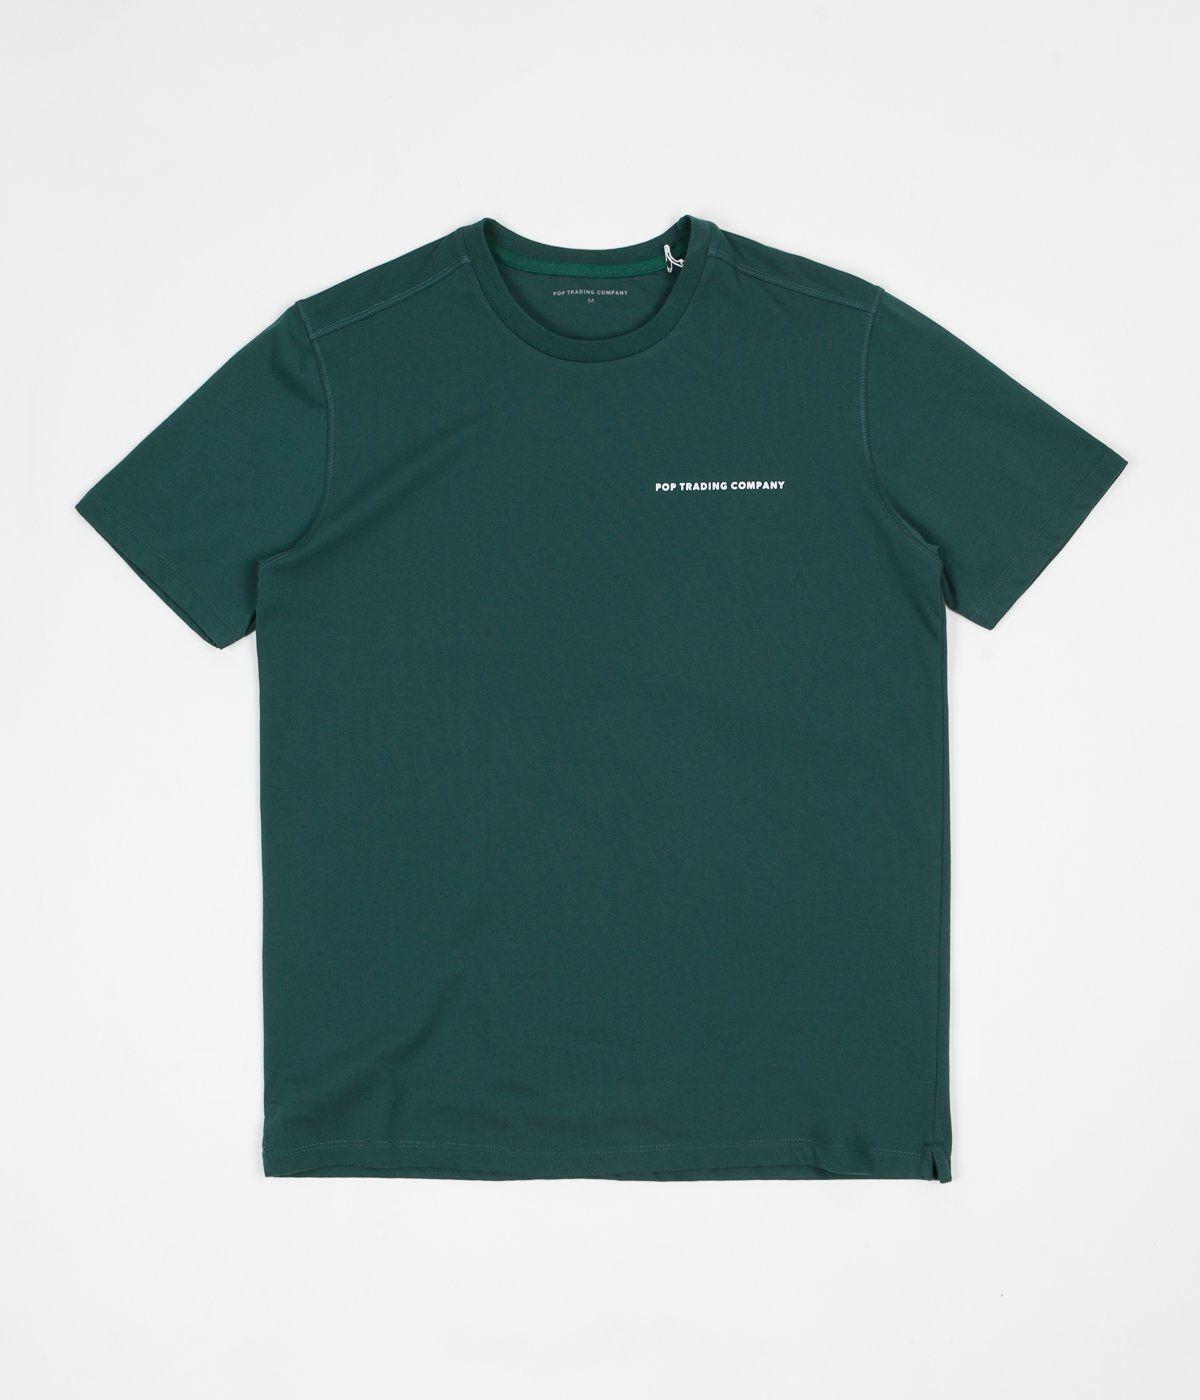 Pop Company Logo - Pop Trading Company Logo T-Shirt - Sports Green | Flatspot